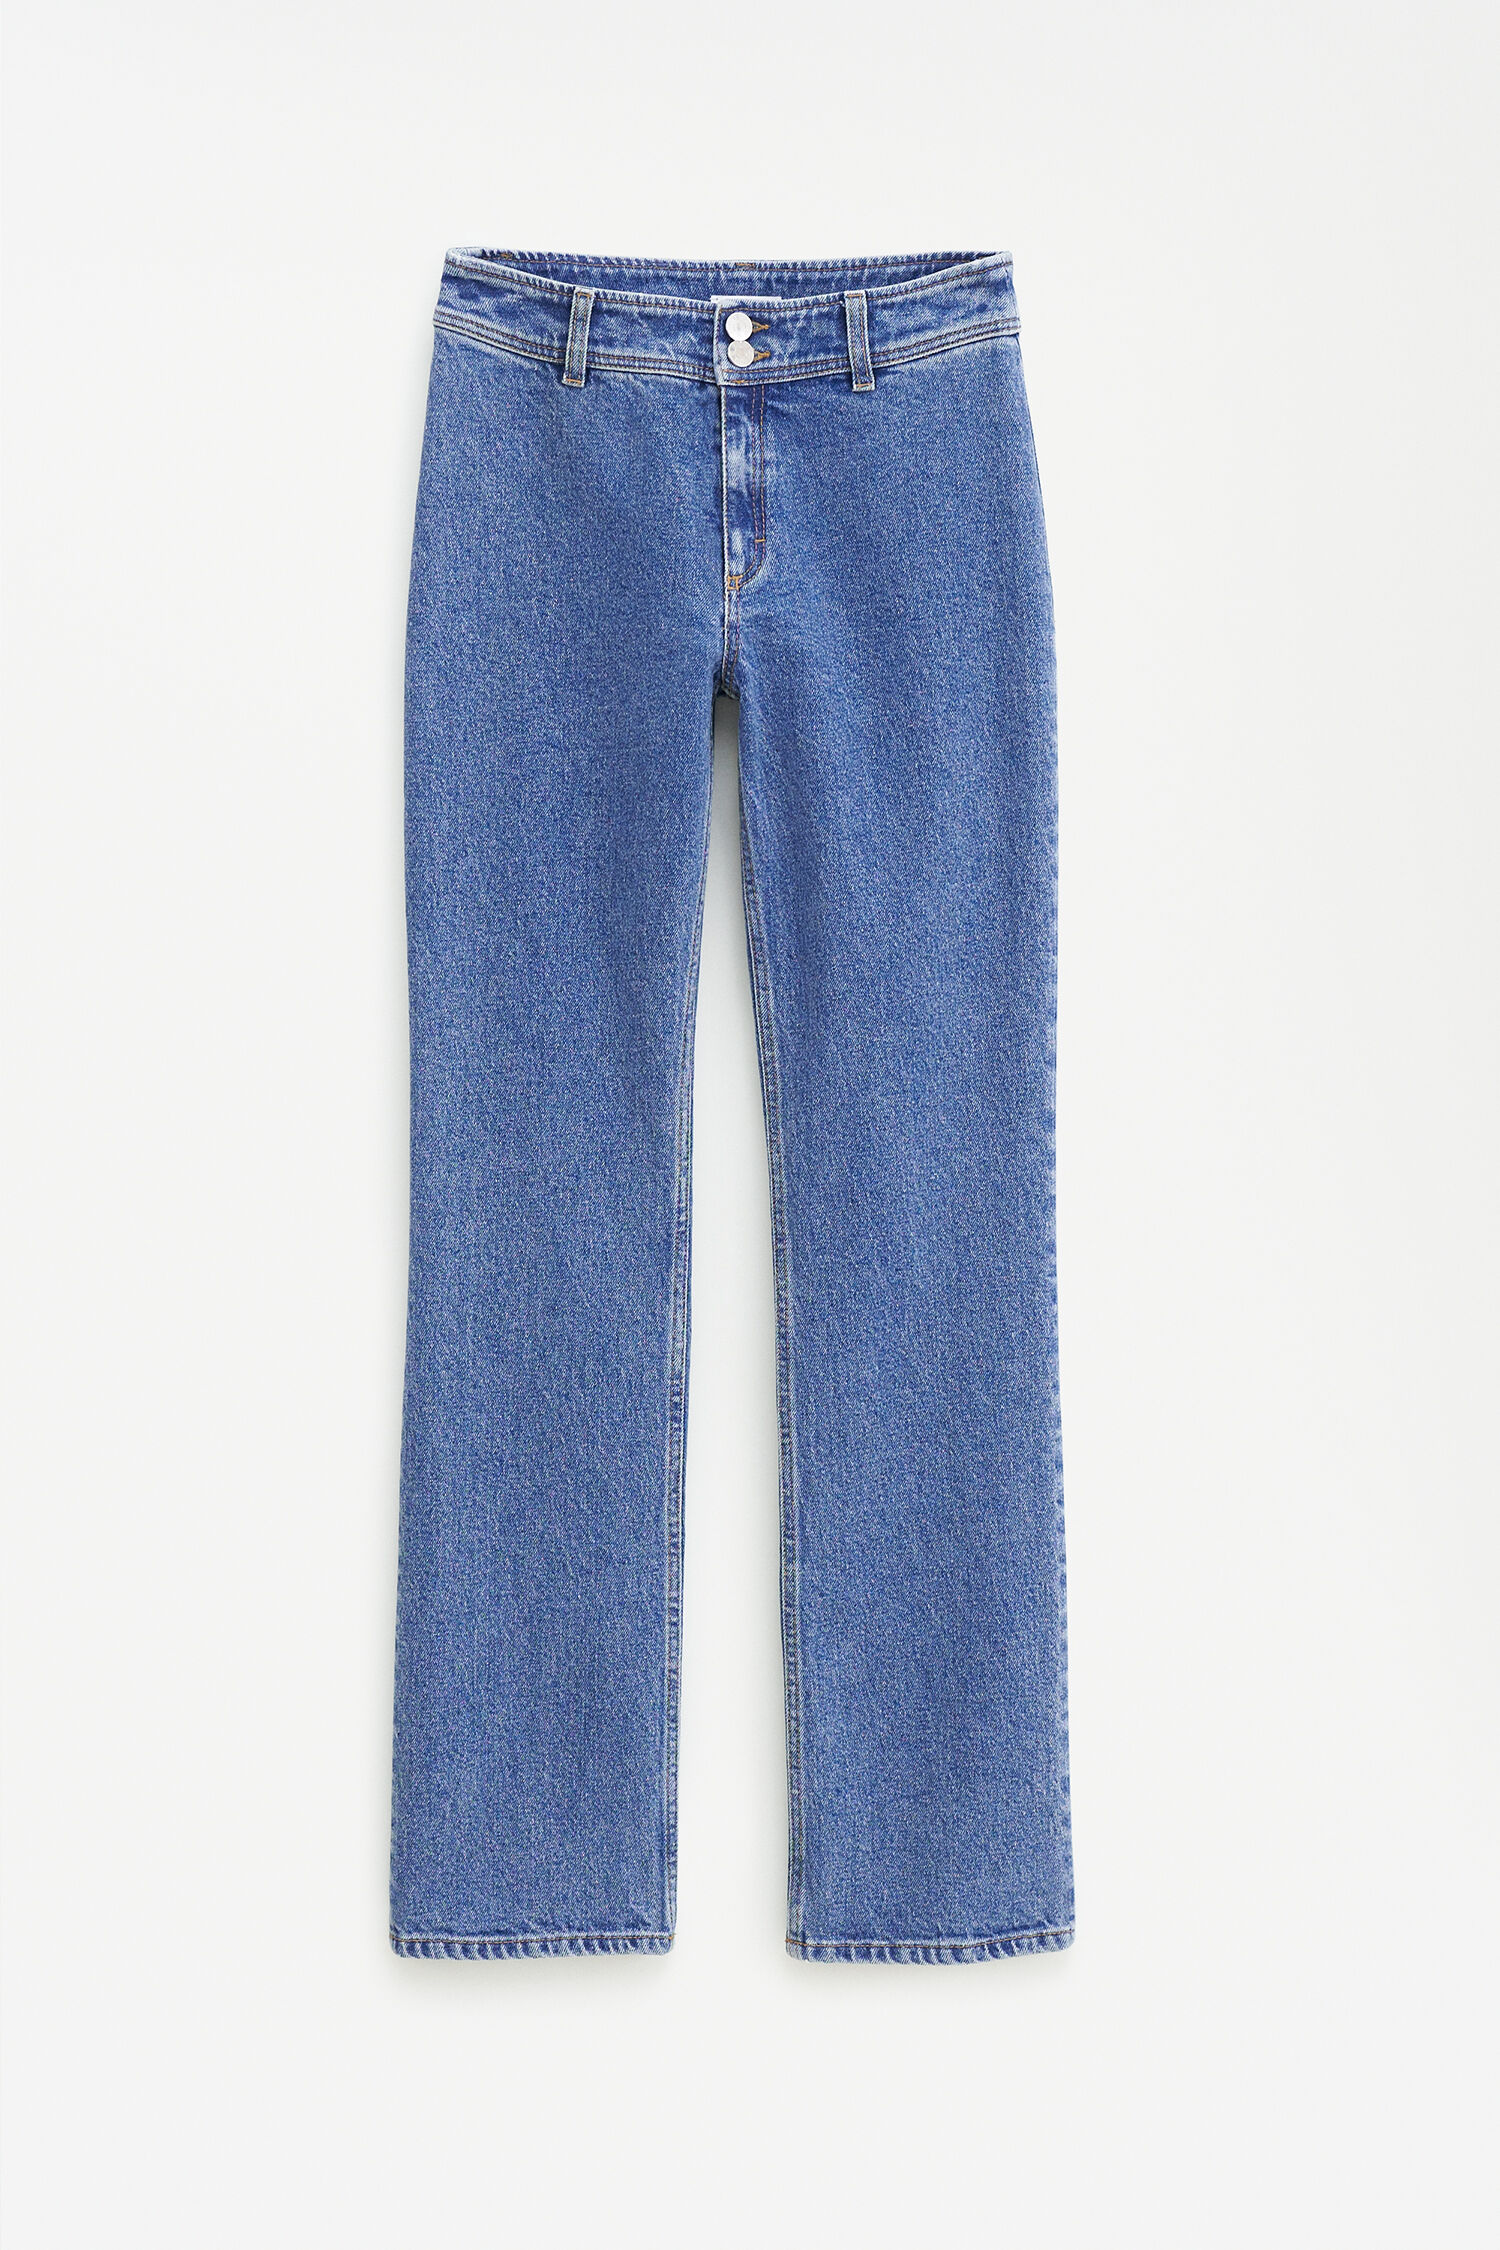 90s Stretch Jeans